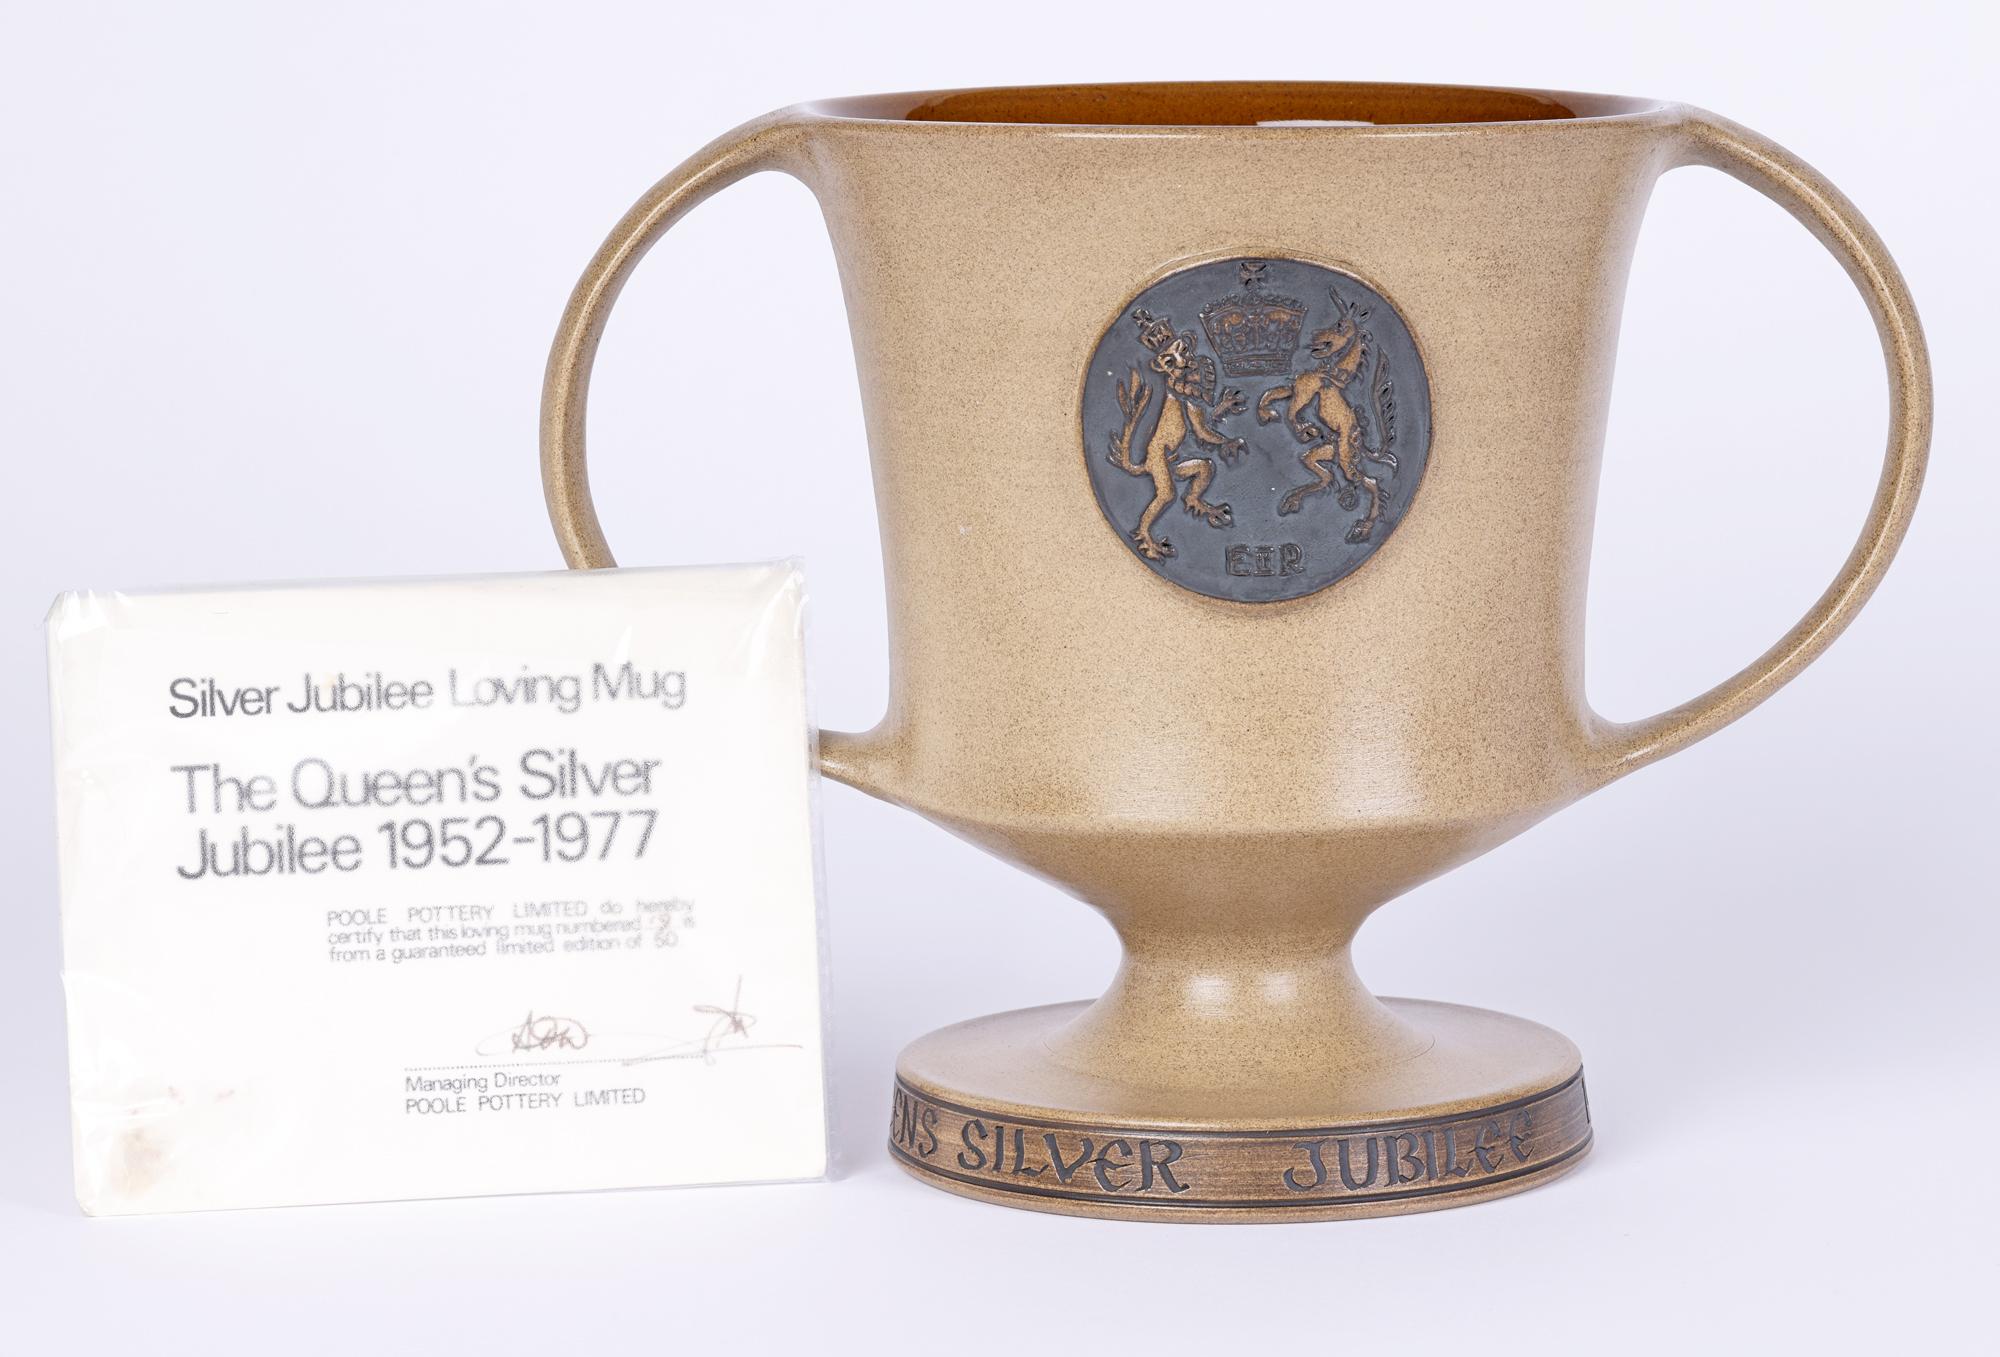 Guy Sydenham Poole Pottery Ltd Edn QEII Silver Jubilee Loving Mug For Sale 4